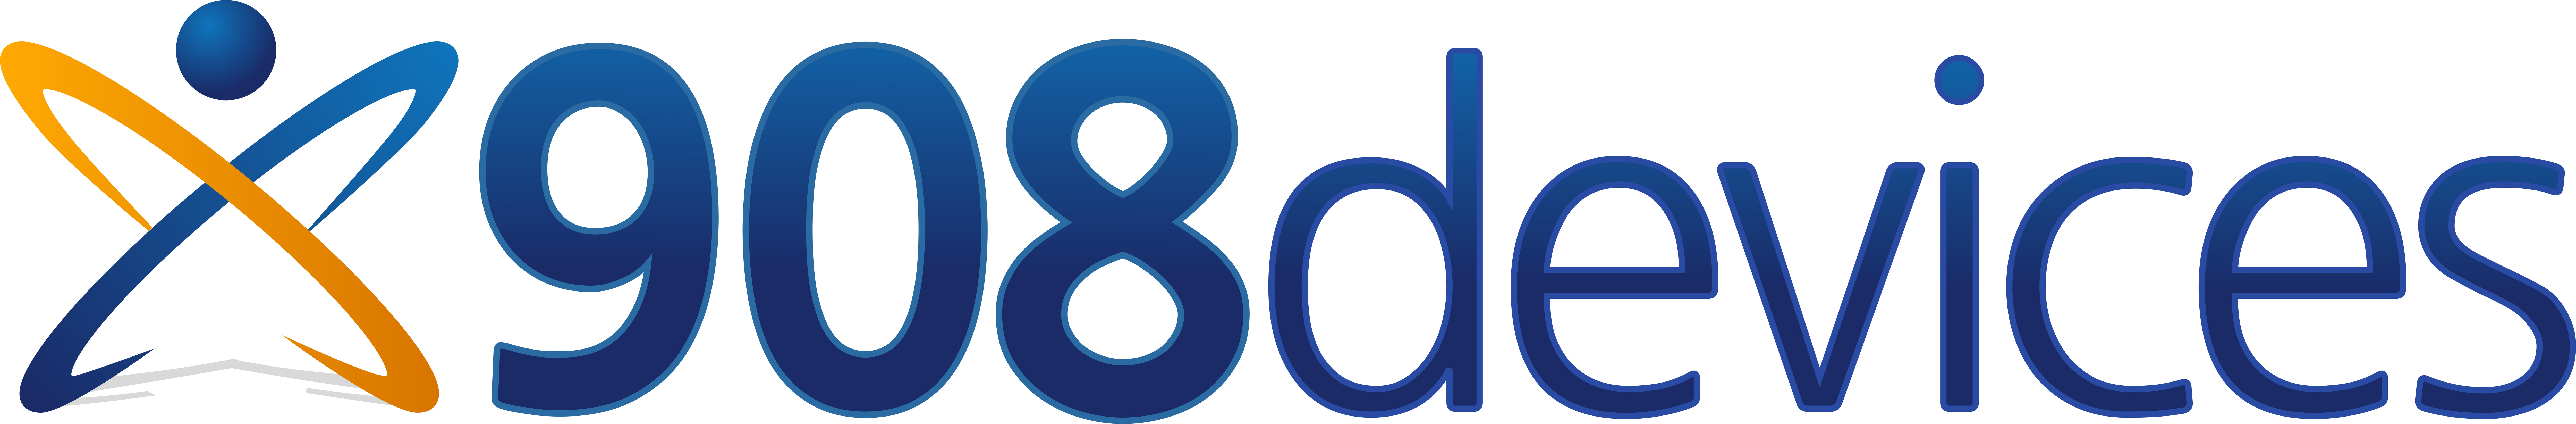 908 Devices Inc Logo